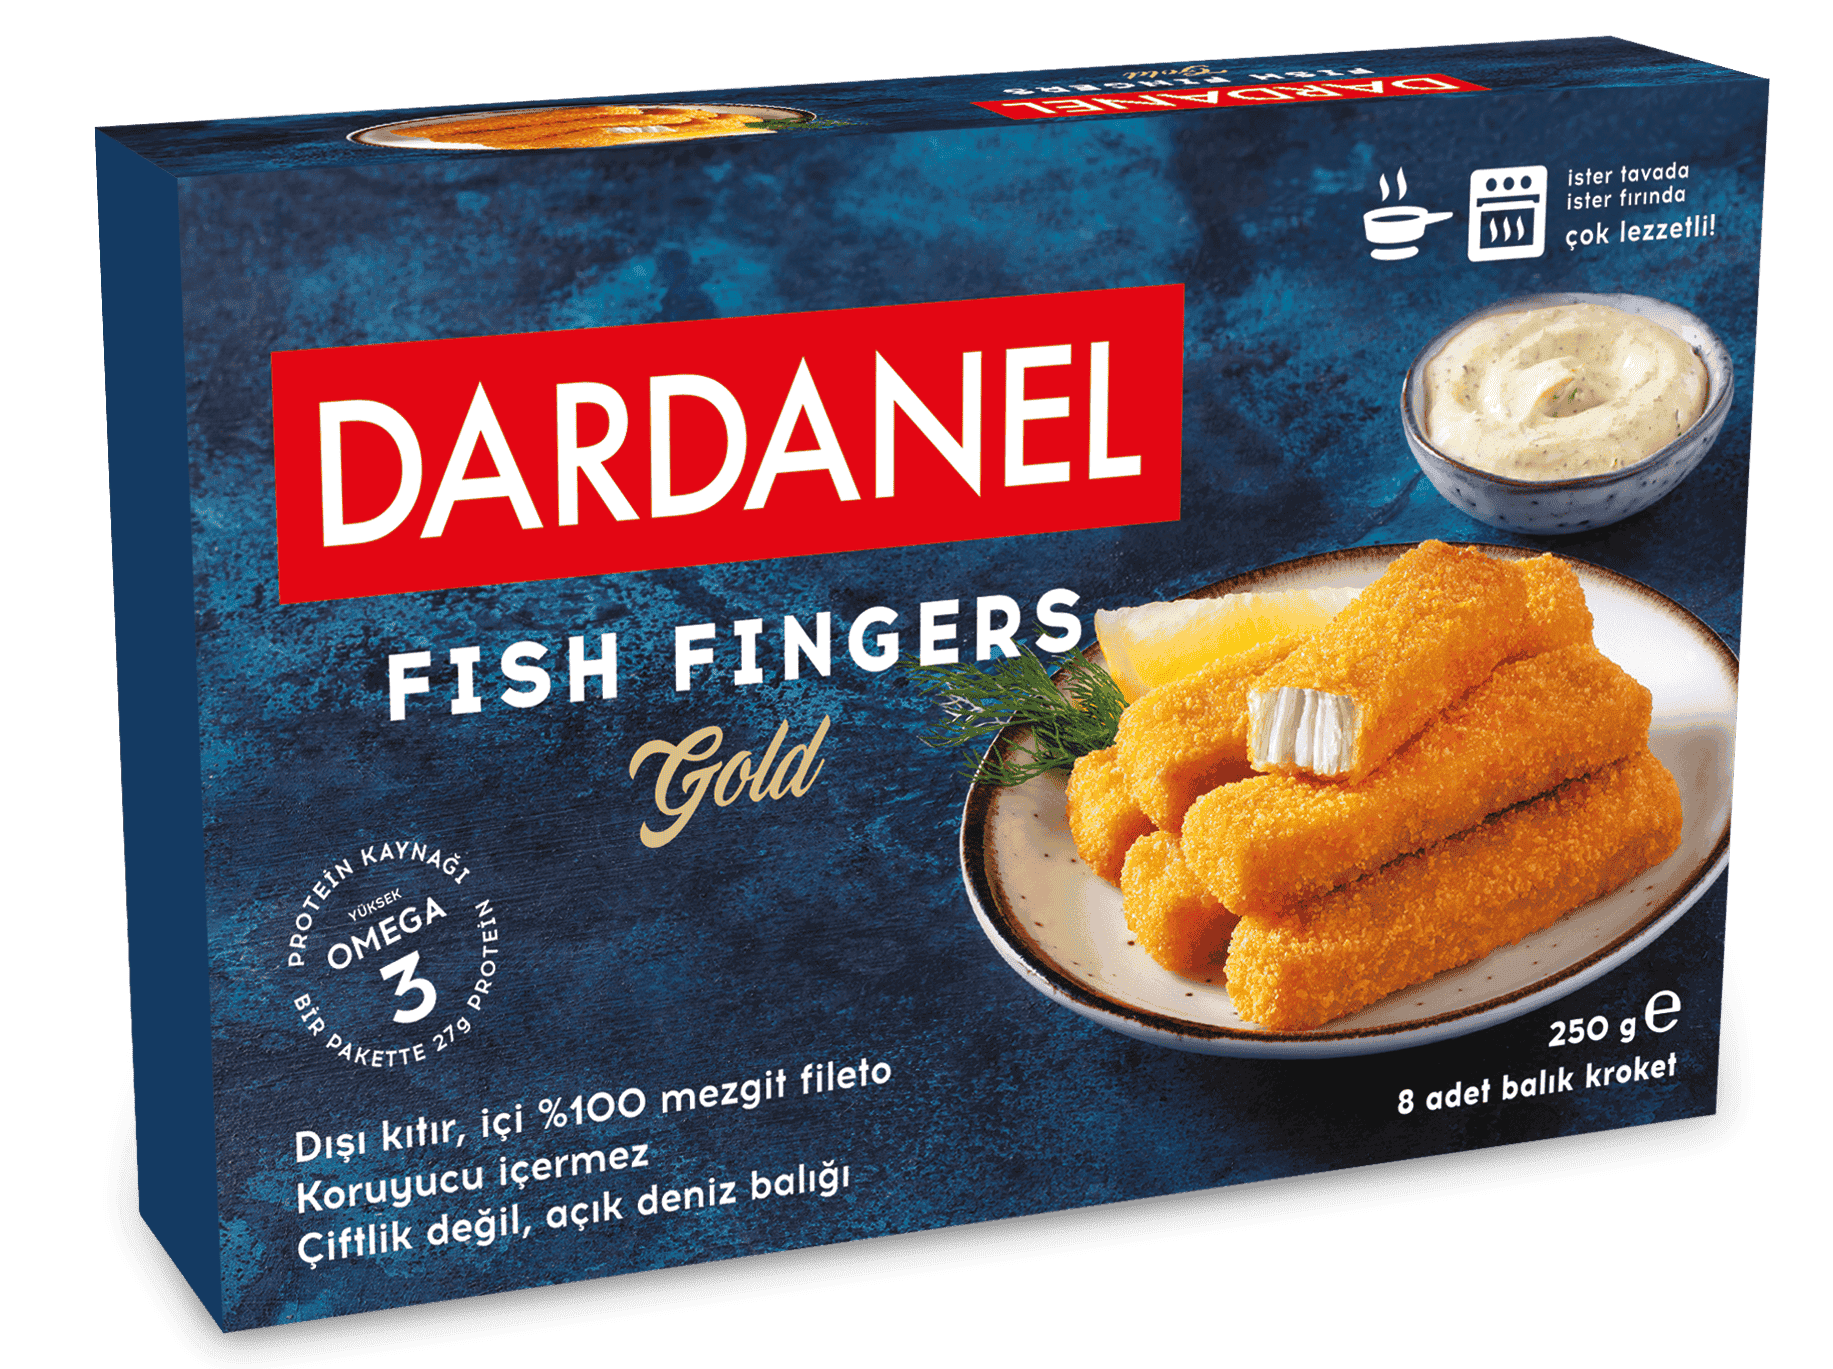 Dardanel Fish Fingers Gold (Haddock Fillet) 250 gr 